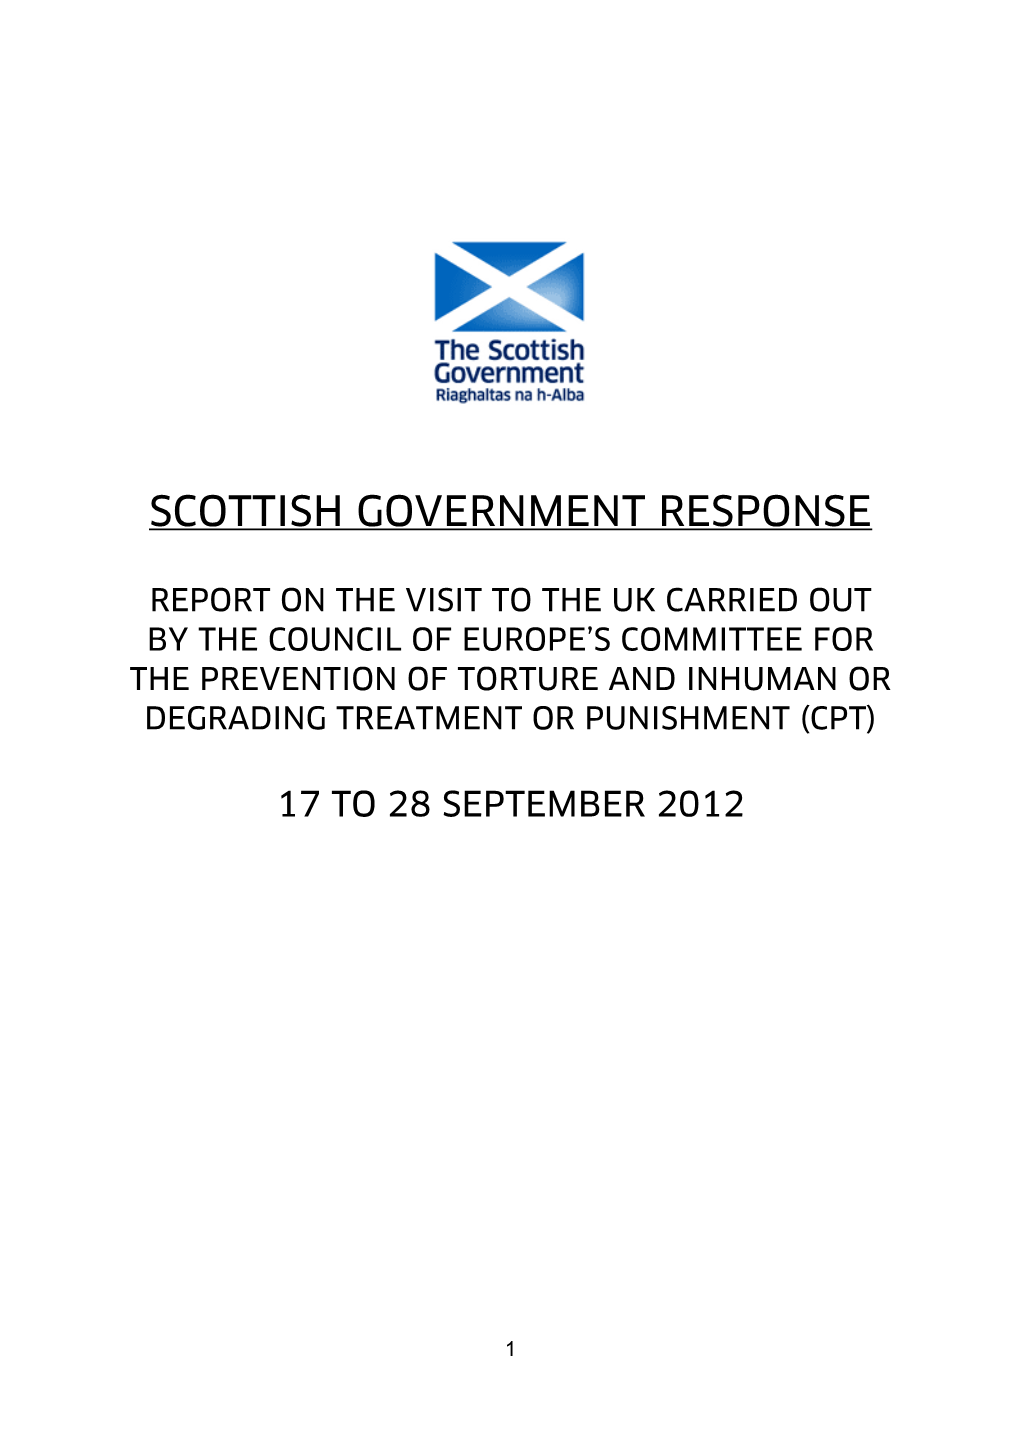 Scottish Government Response